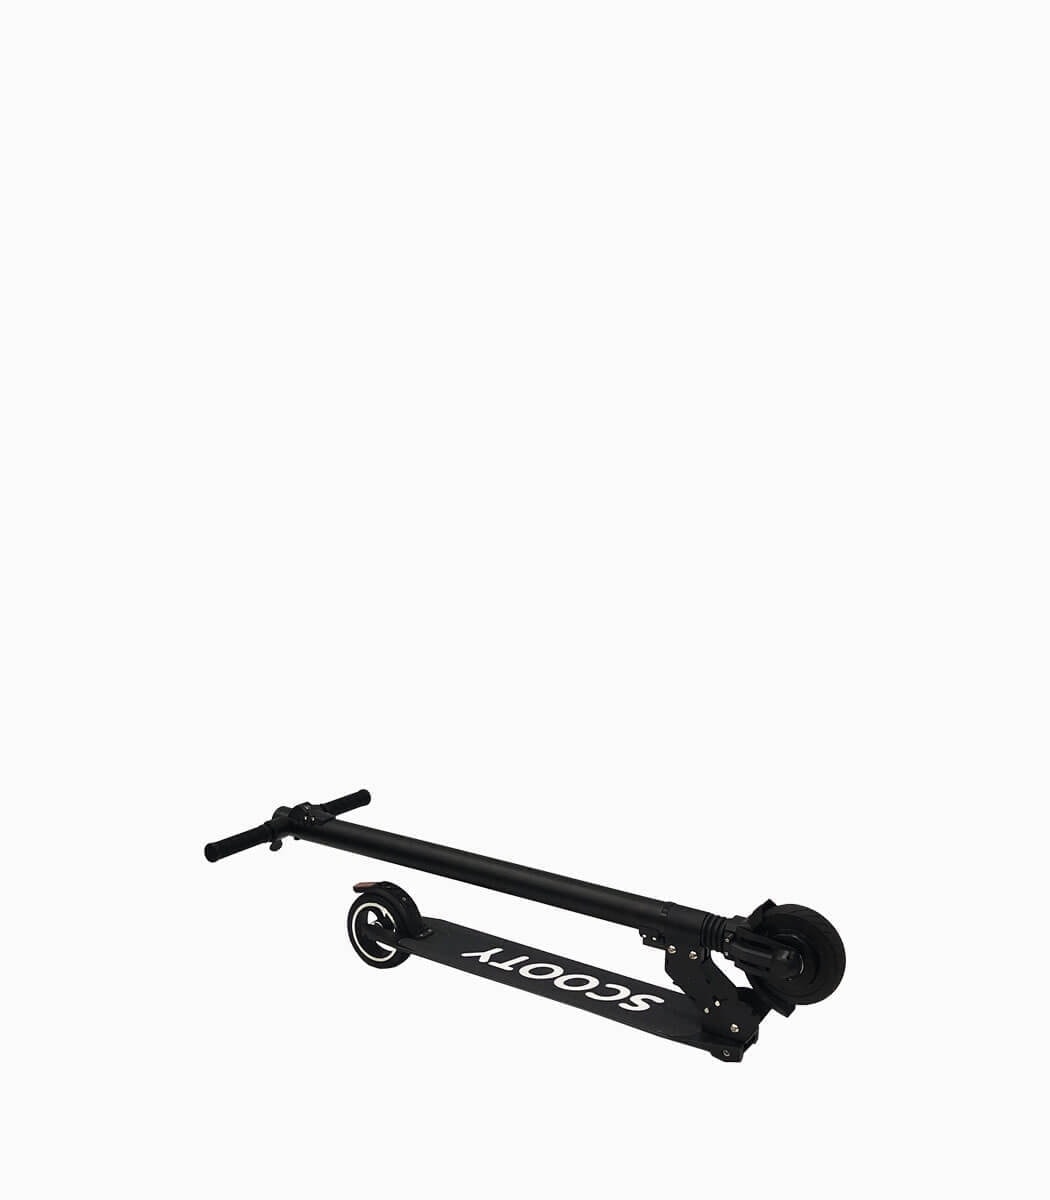 MOBOT SCOOTY F1K (BLACK4AH) UL2272 certified lightweight e-scooter folded angled right V1